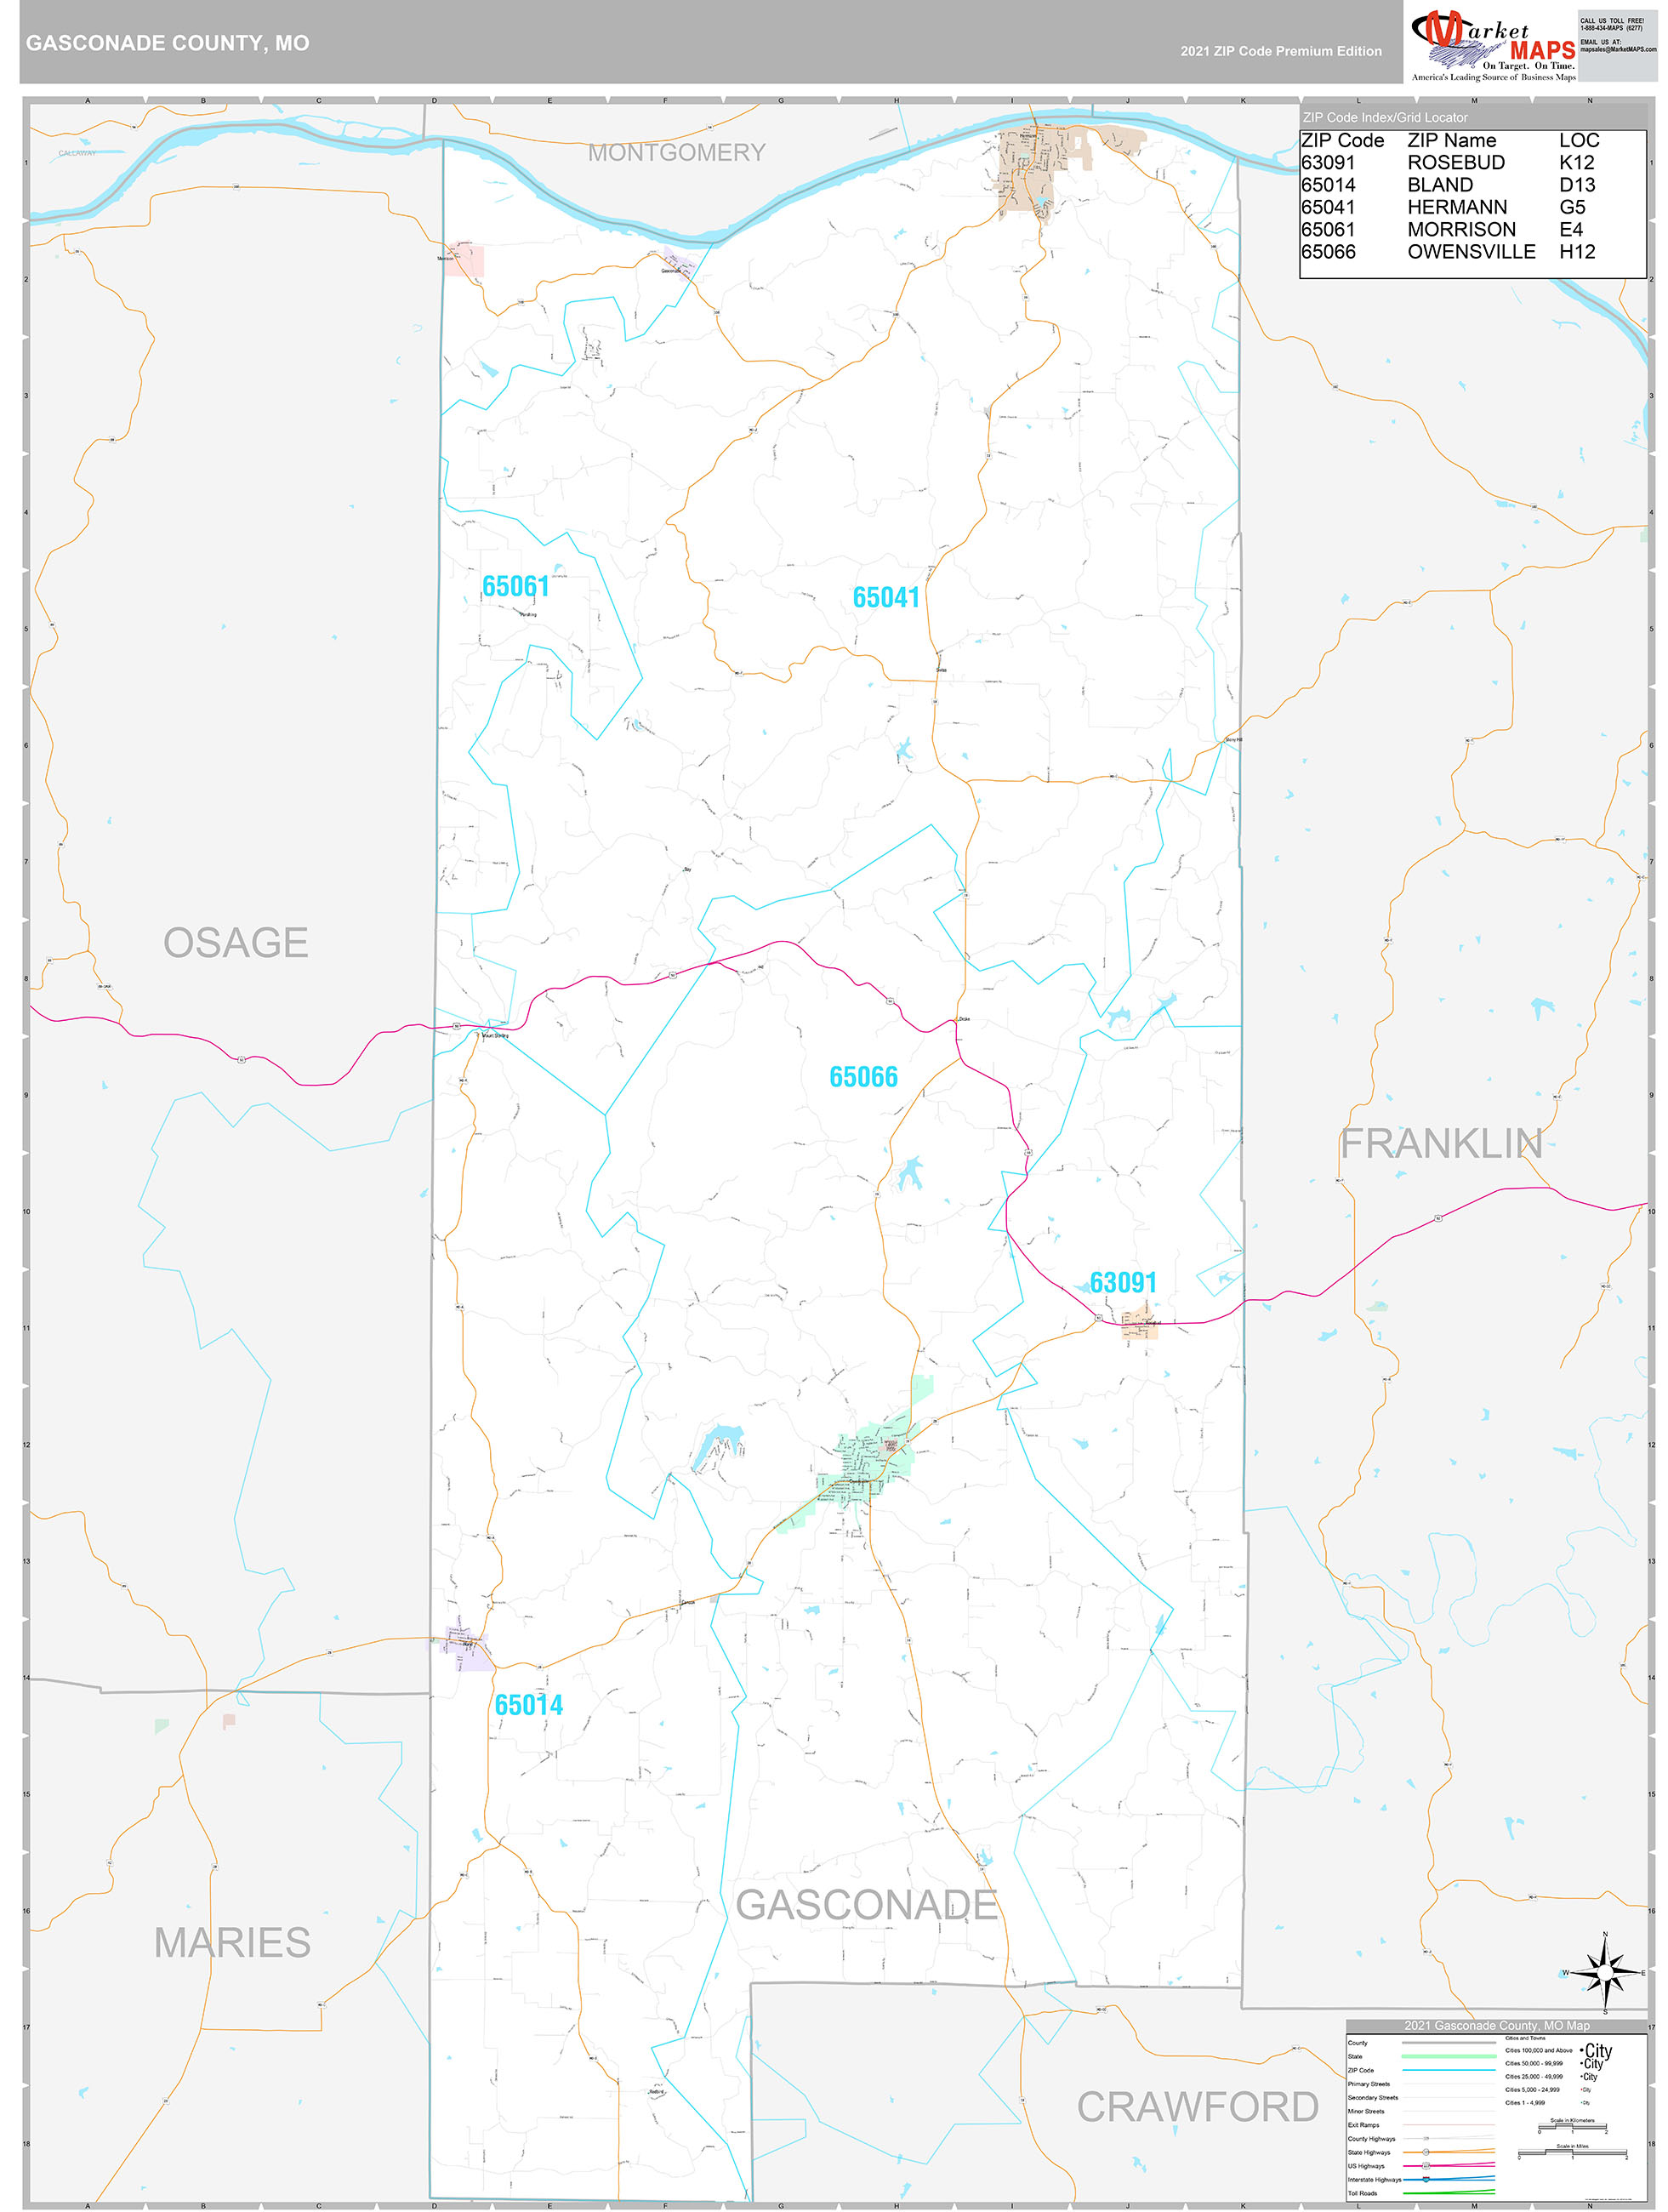 Gasconade County Mo Wall Map Premium Style By Marketmaps 0776